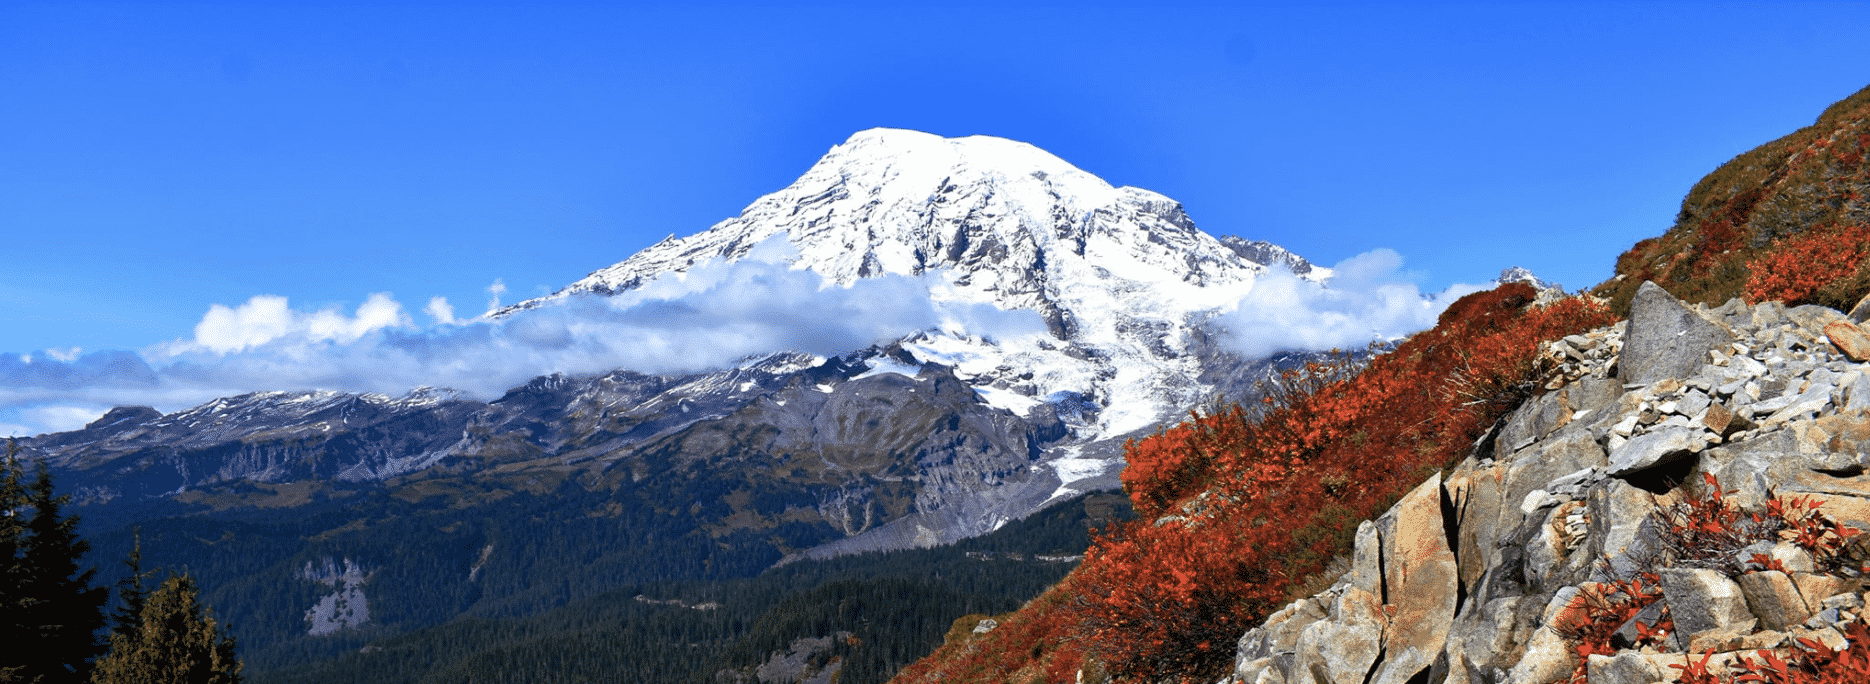 Mount Rainier's Still There (Poem and Photos by Karen Molenaar Terrell)